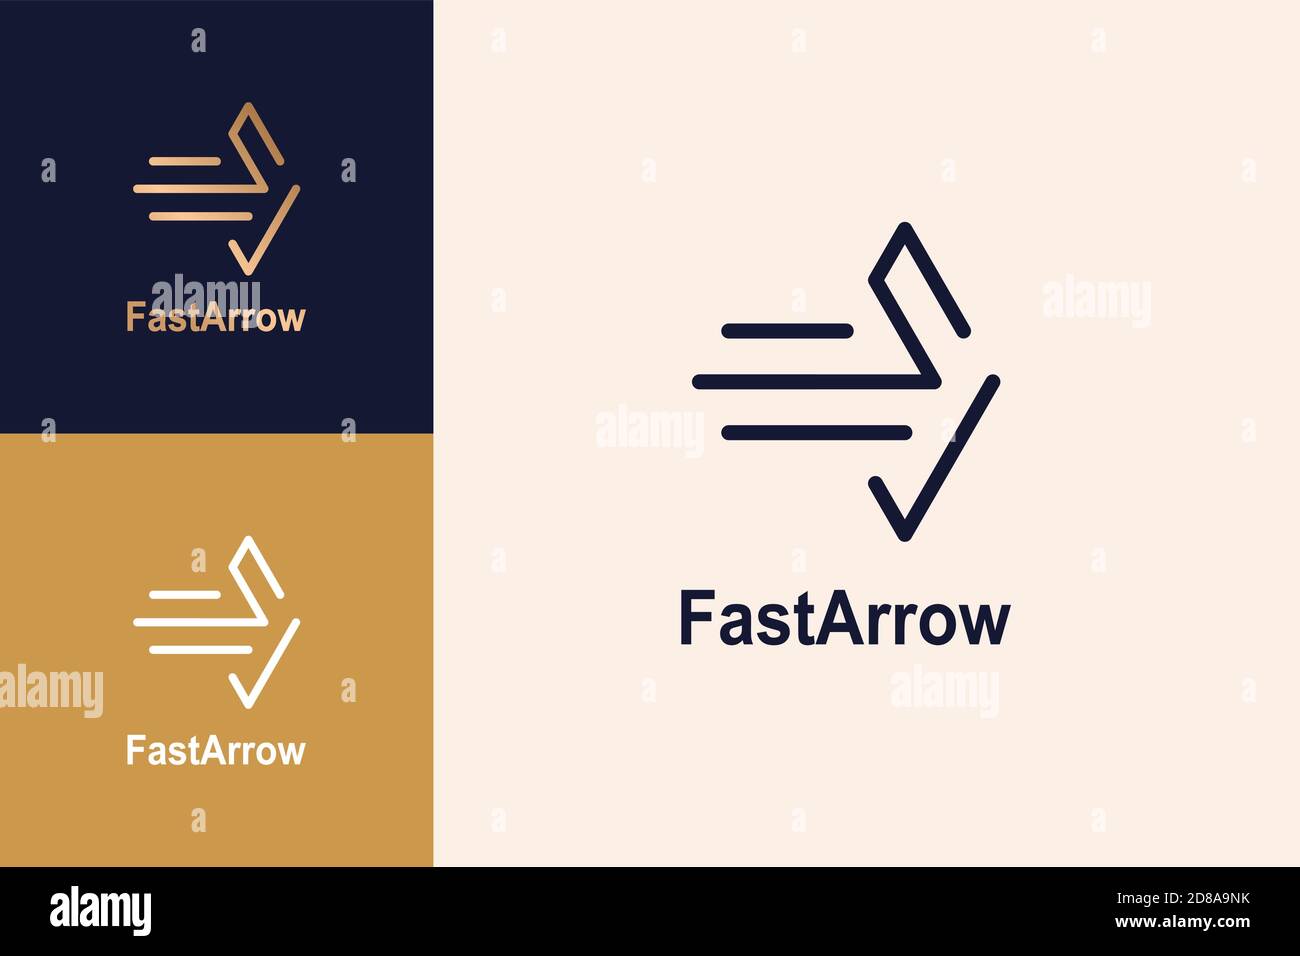 Fast arrow logo design concept, line style. Stock Vector